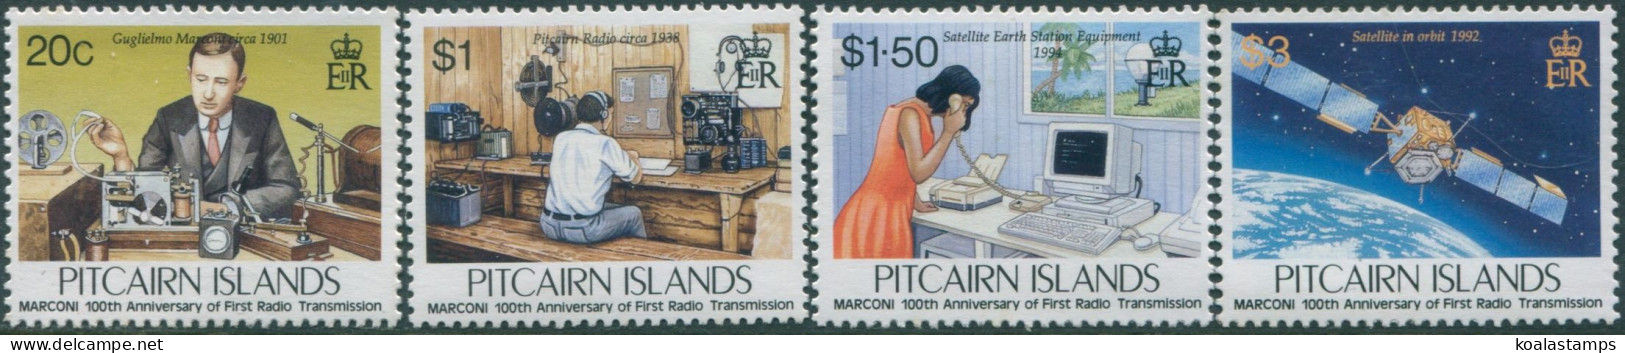 Pitcairn Islands 1995 SG479-482 First Radio Transmission Set MNH - Pitcairneilanden